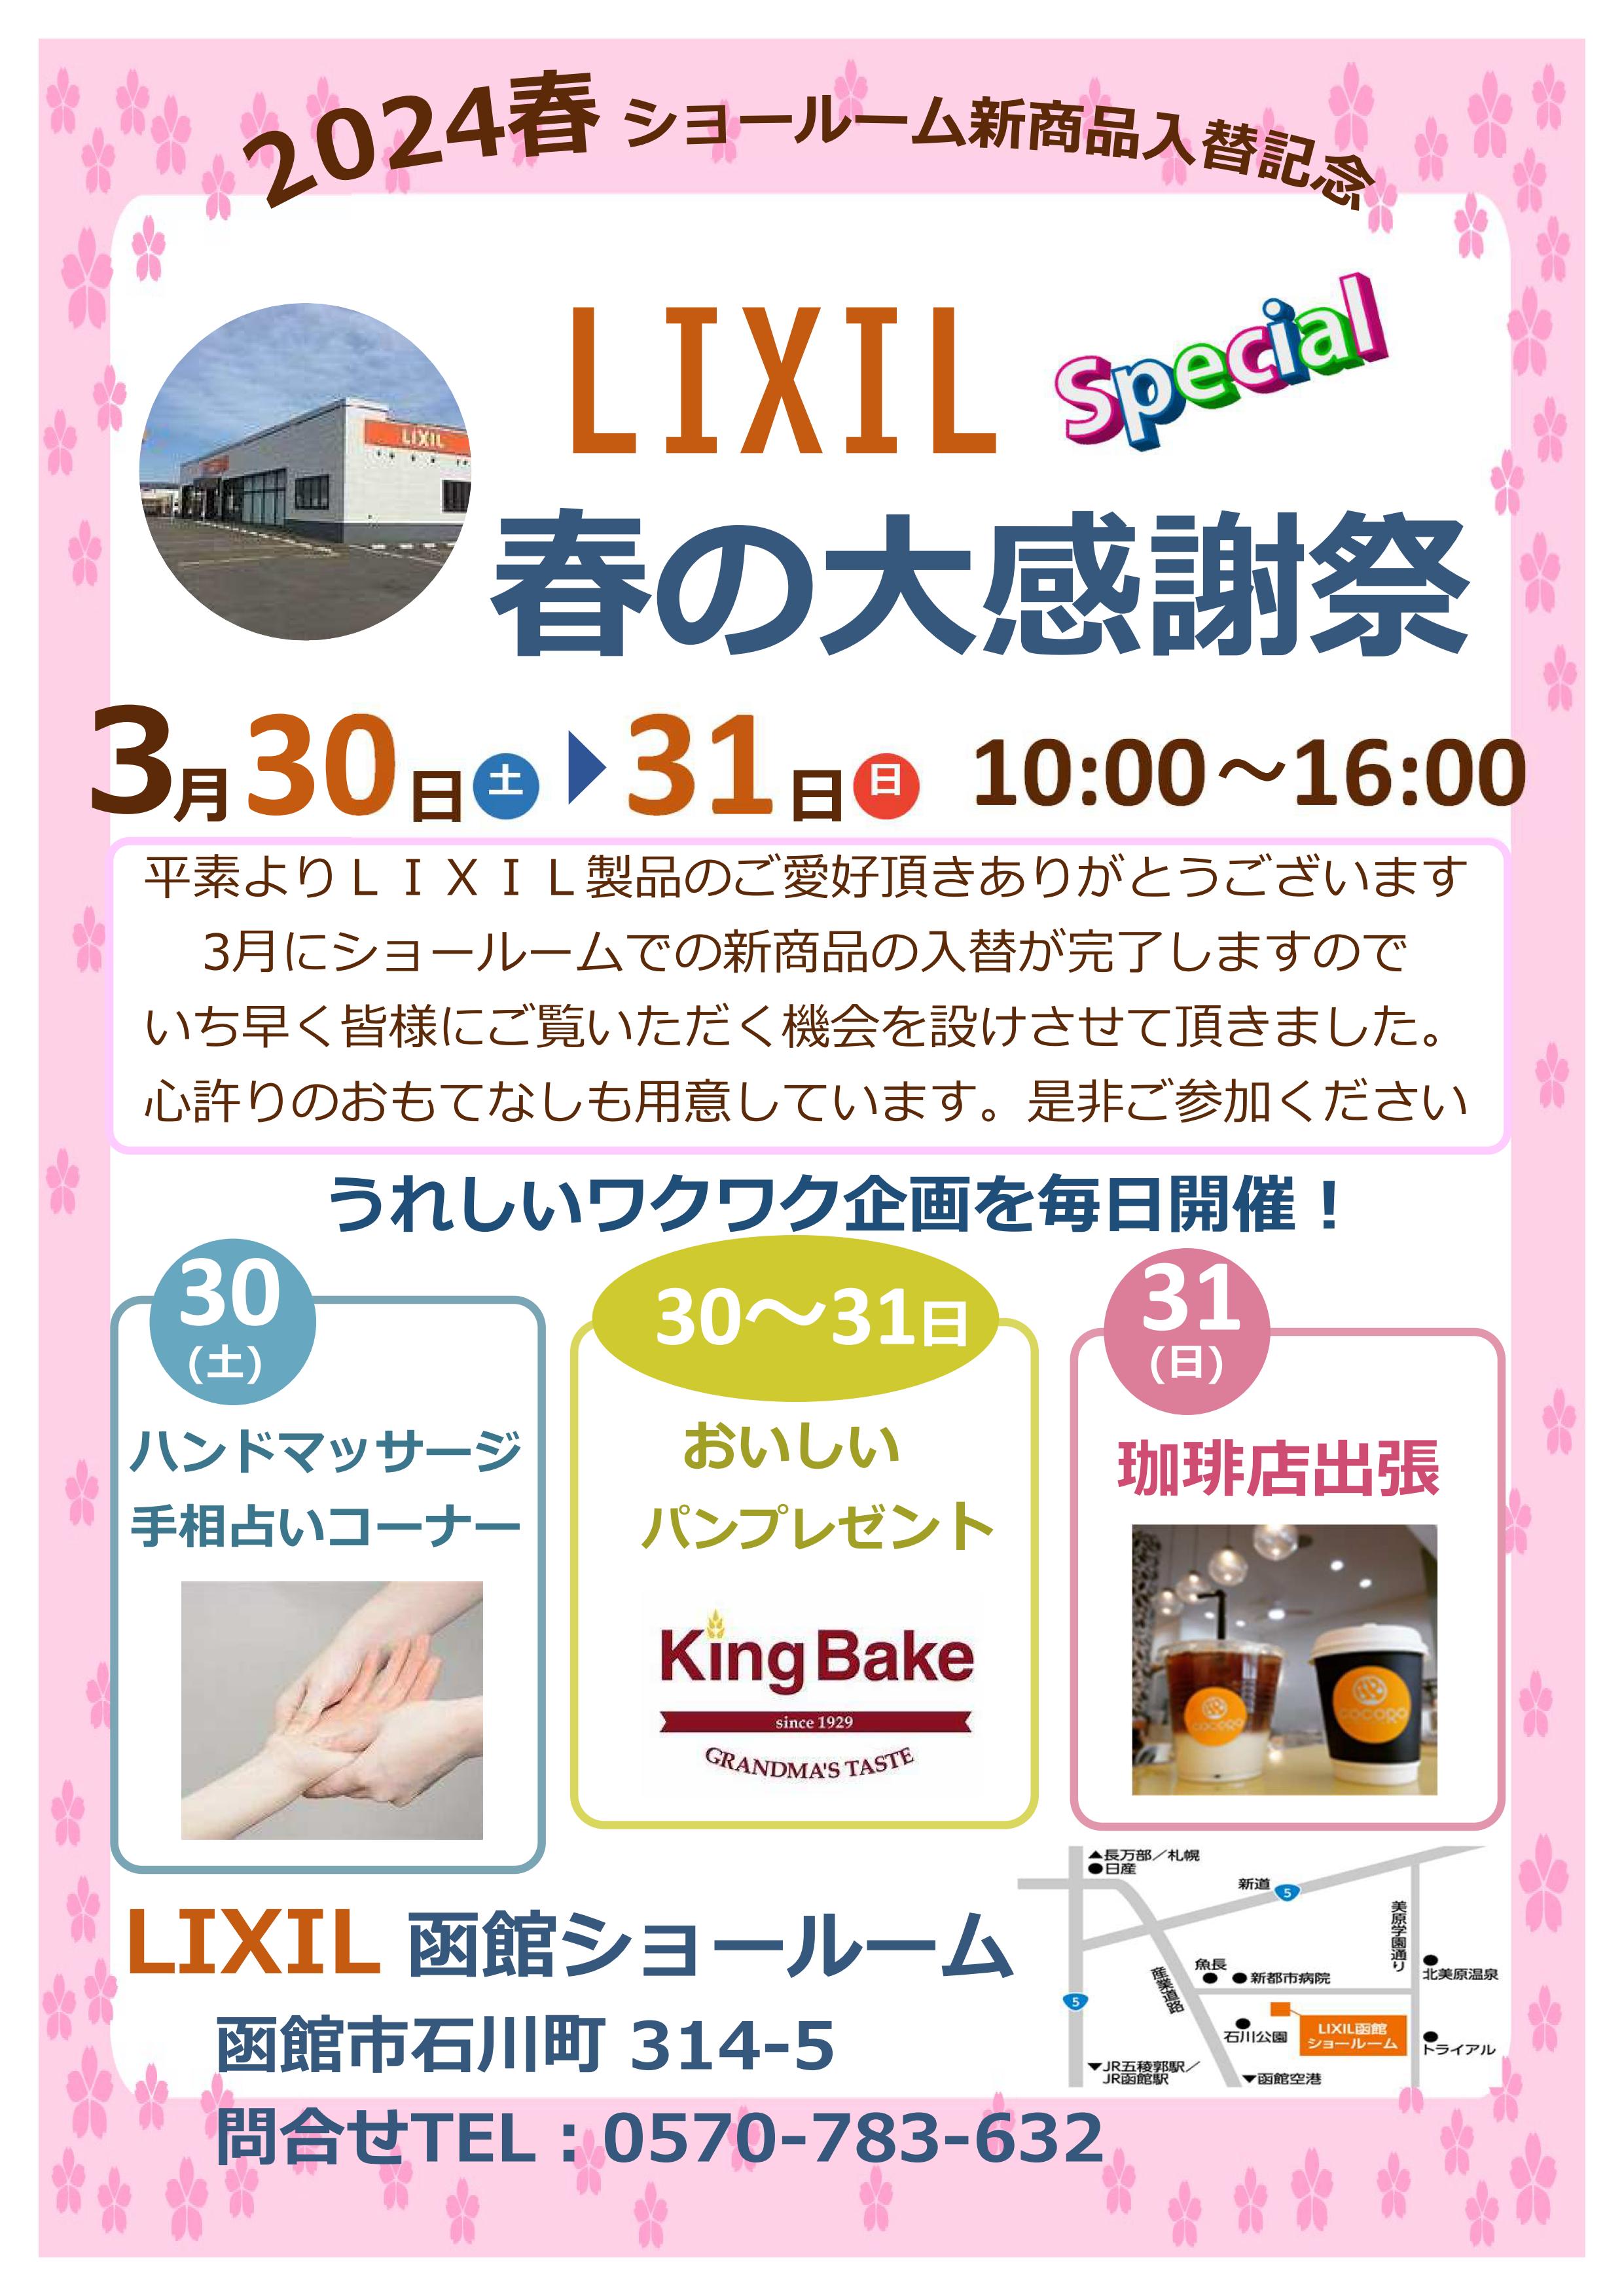 LIXIL函館春のショールーム・大感謝祭🎵 リ・ウィンドのブログ 写真1